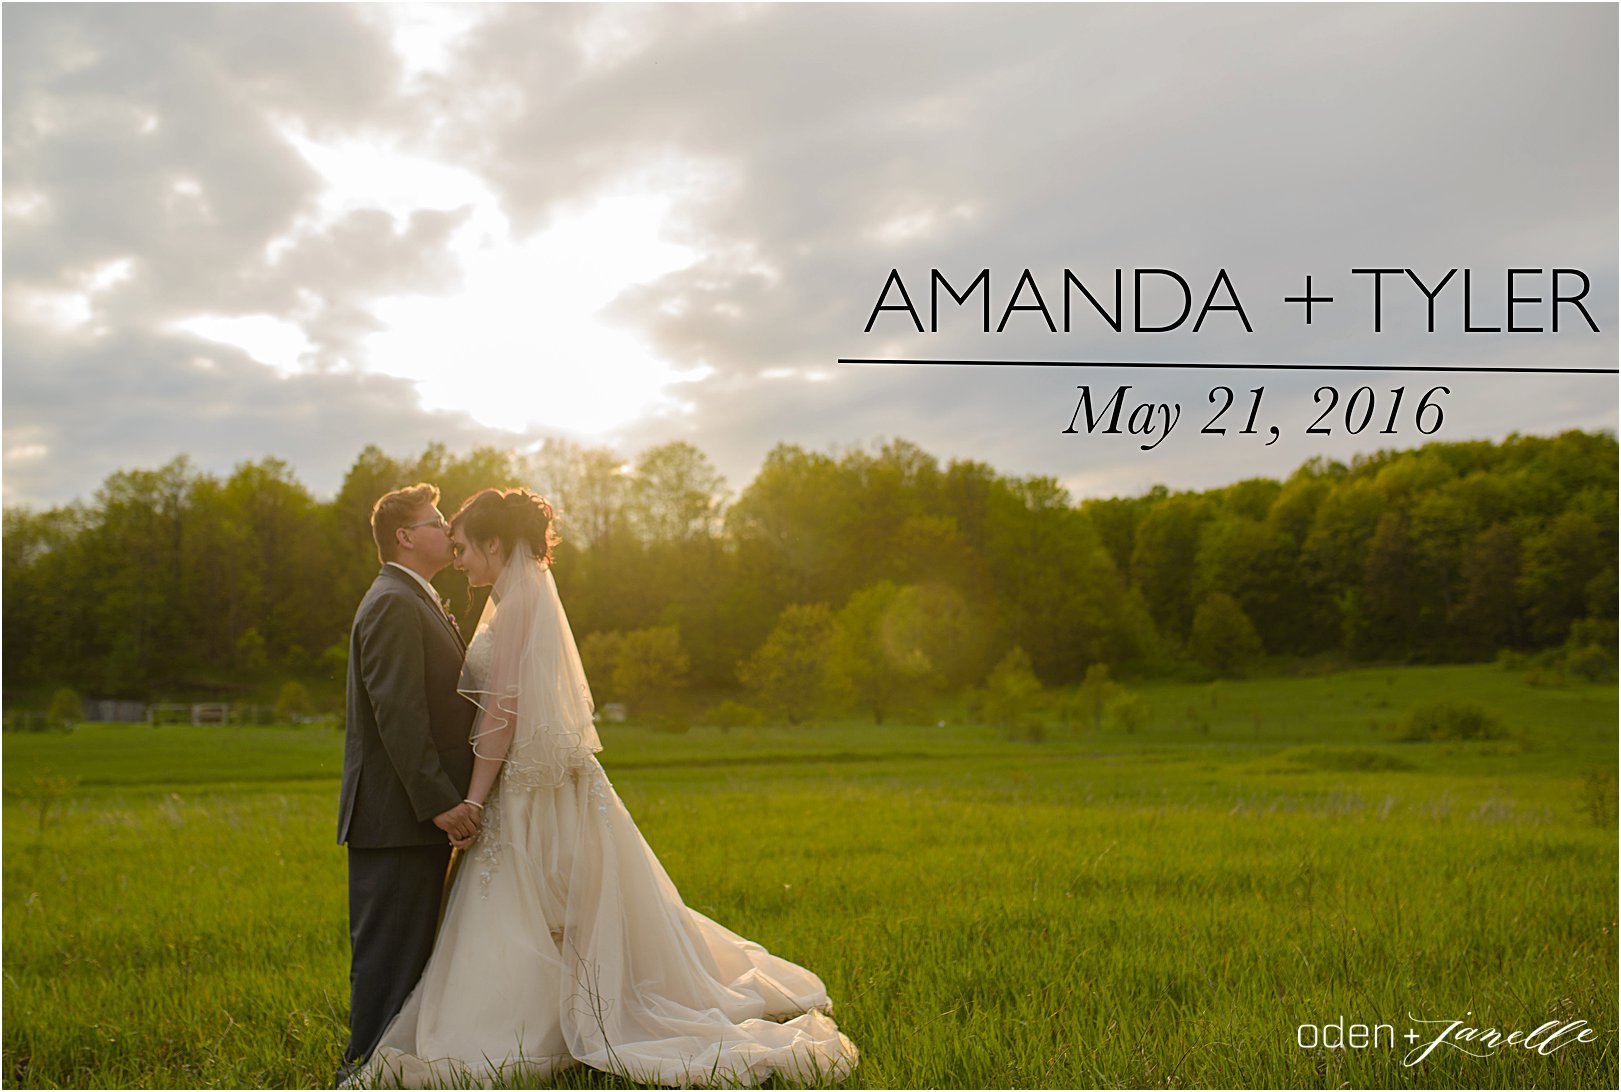 Amanda + Tyler -COVER Oden & Janelle Photography 2016 |ODE_7201|17.jpg